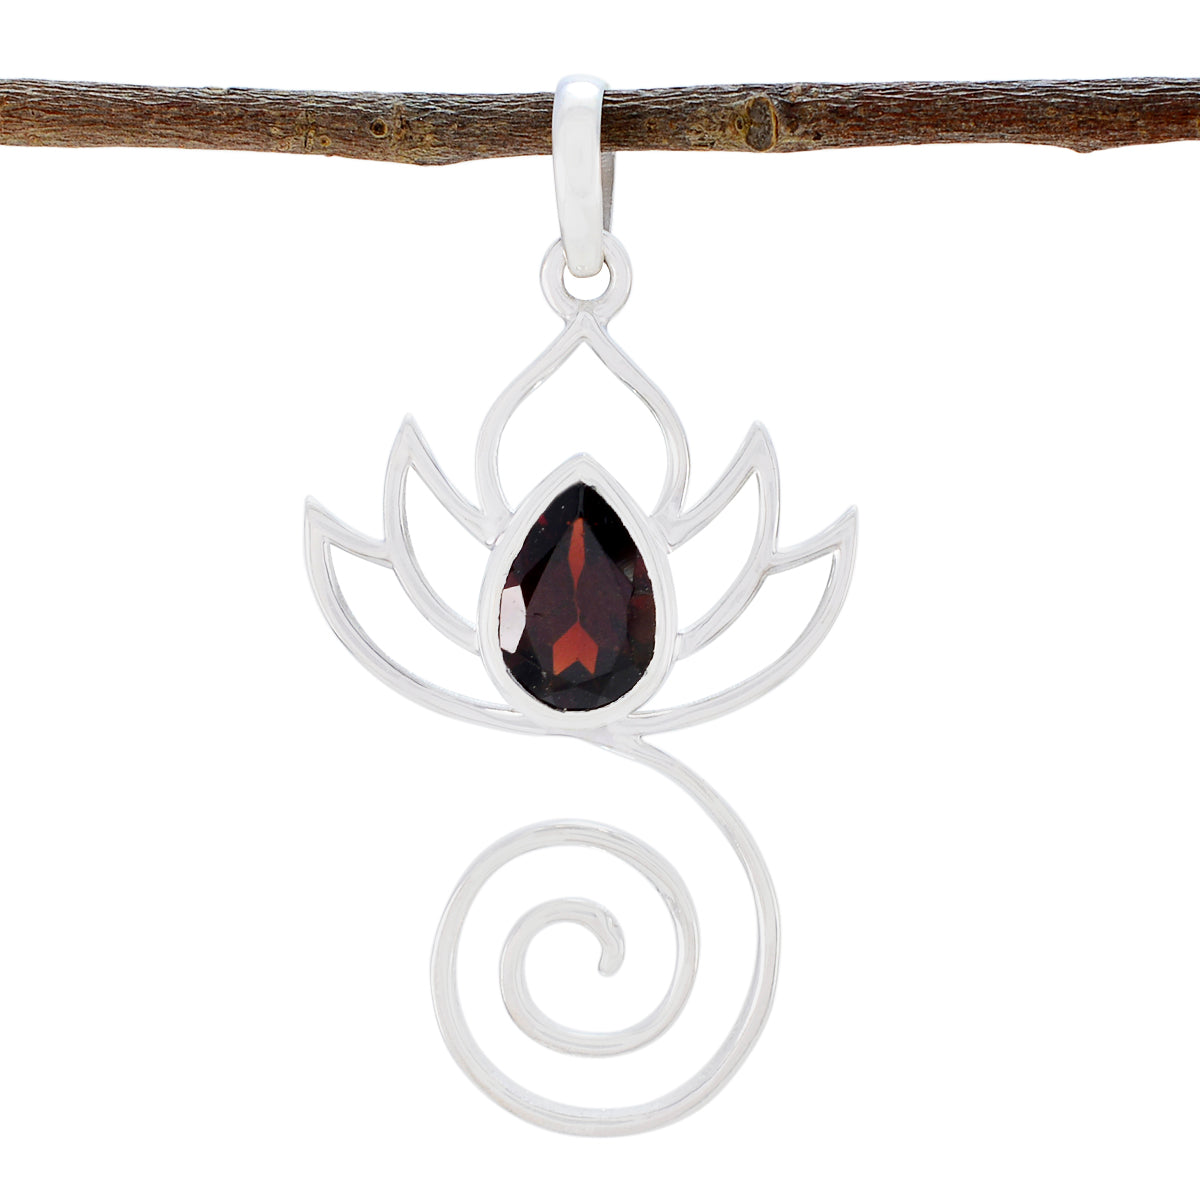 Riyo Appealing Gems Pear Faceted Red Garnet Silver Pendant Gift For Sister